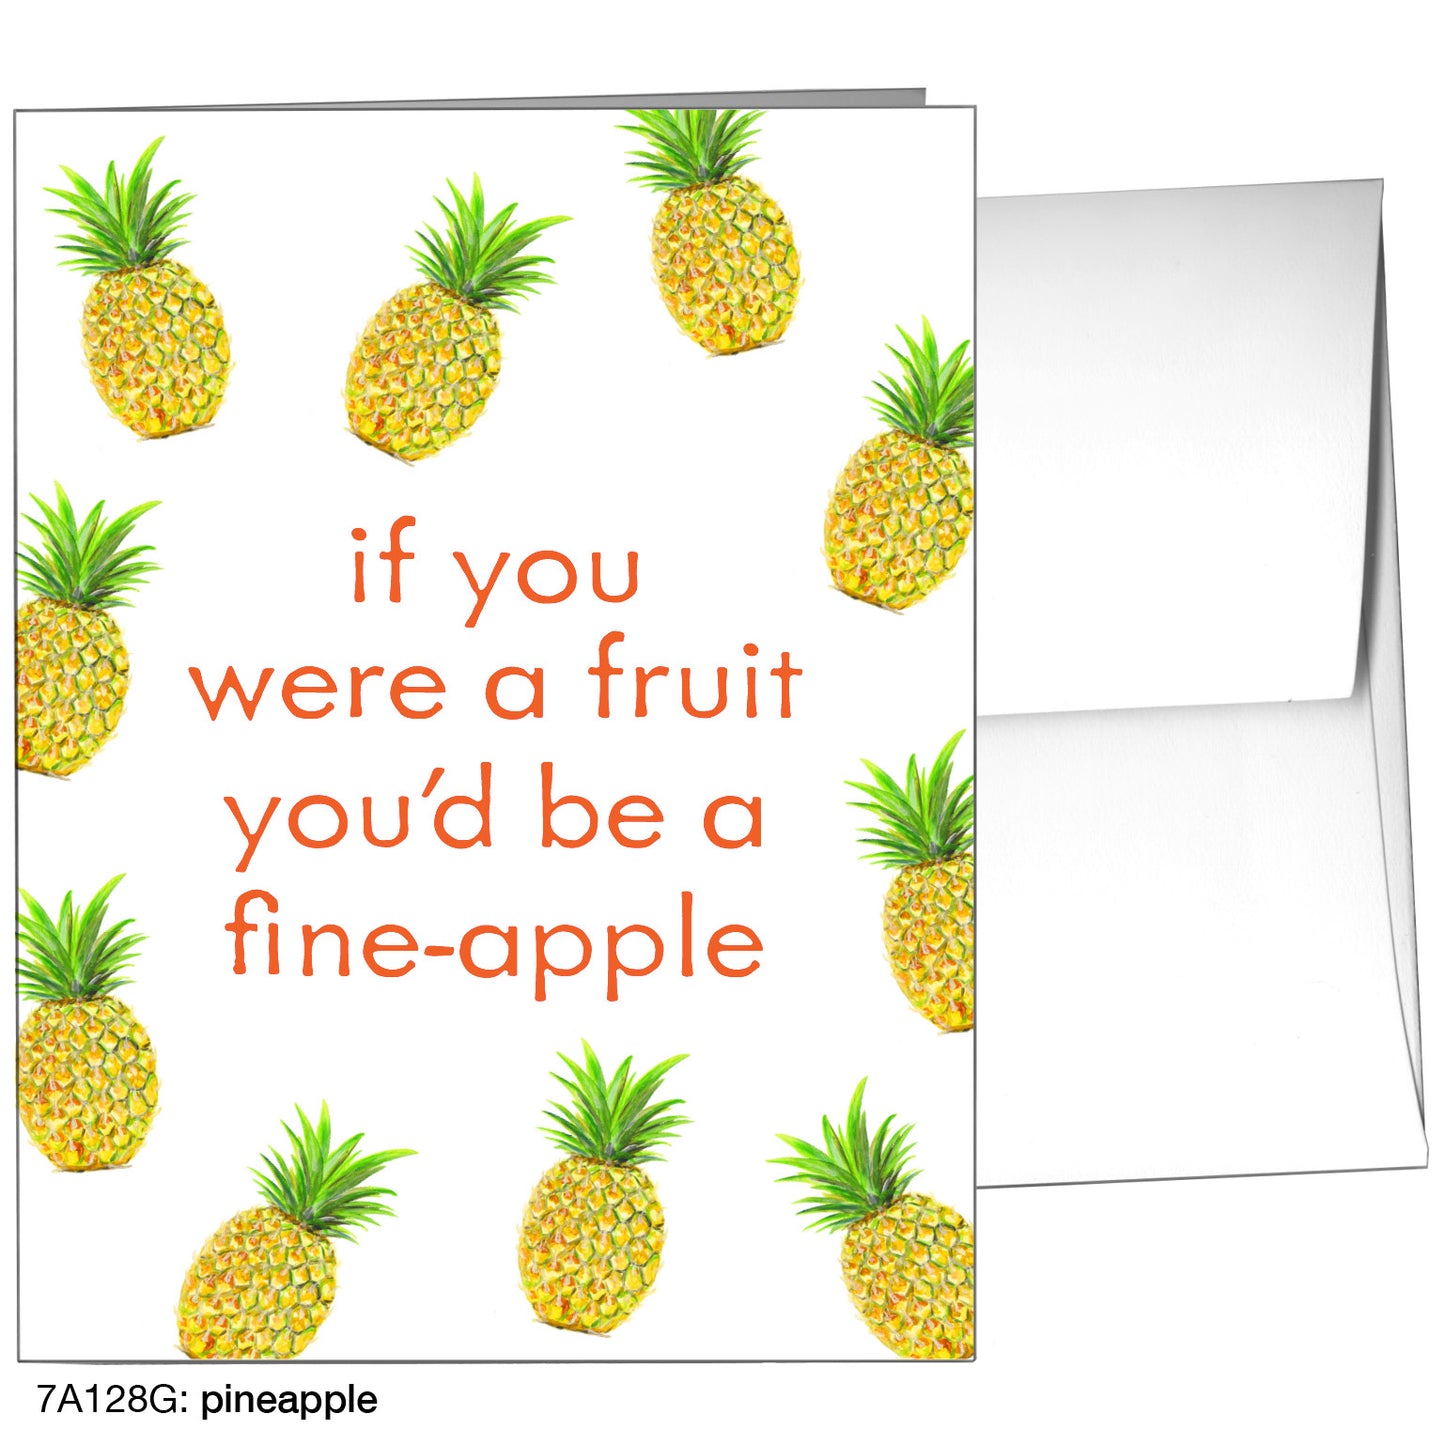 Pineapple, Greeting Card (8309G)